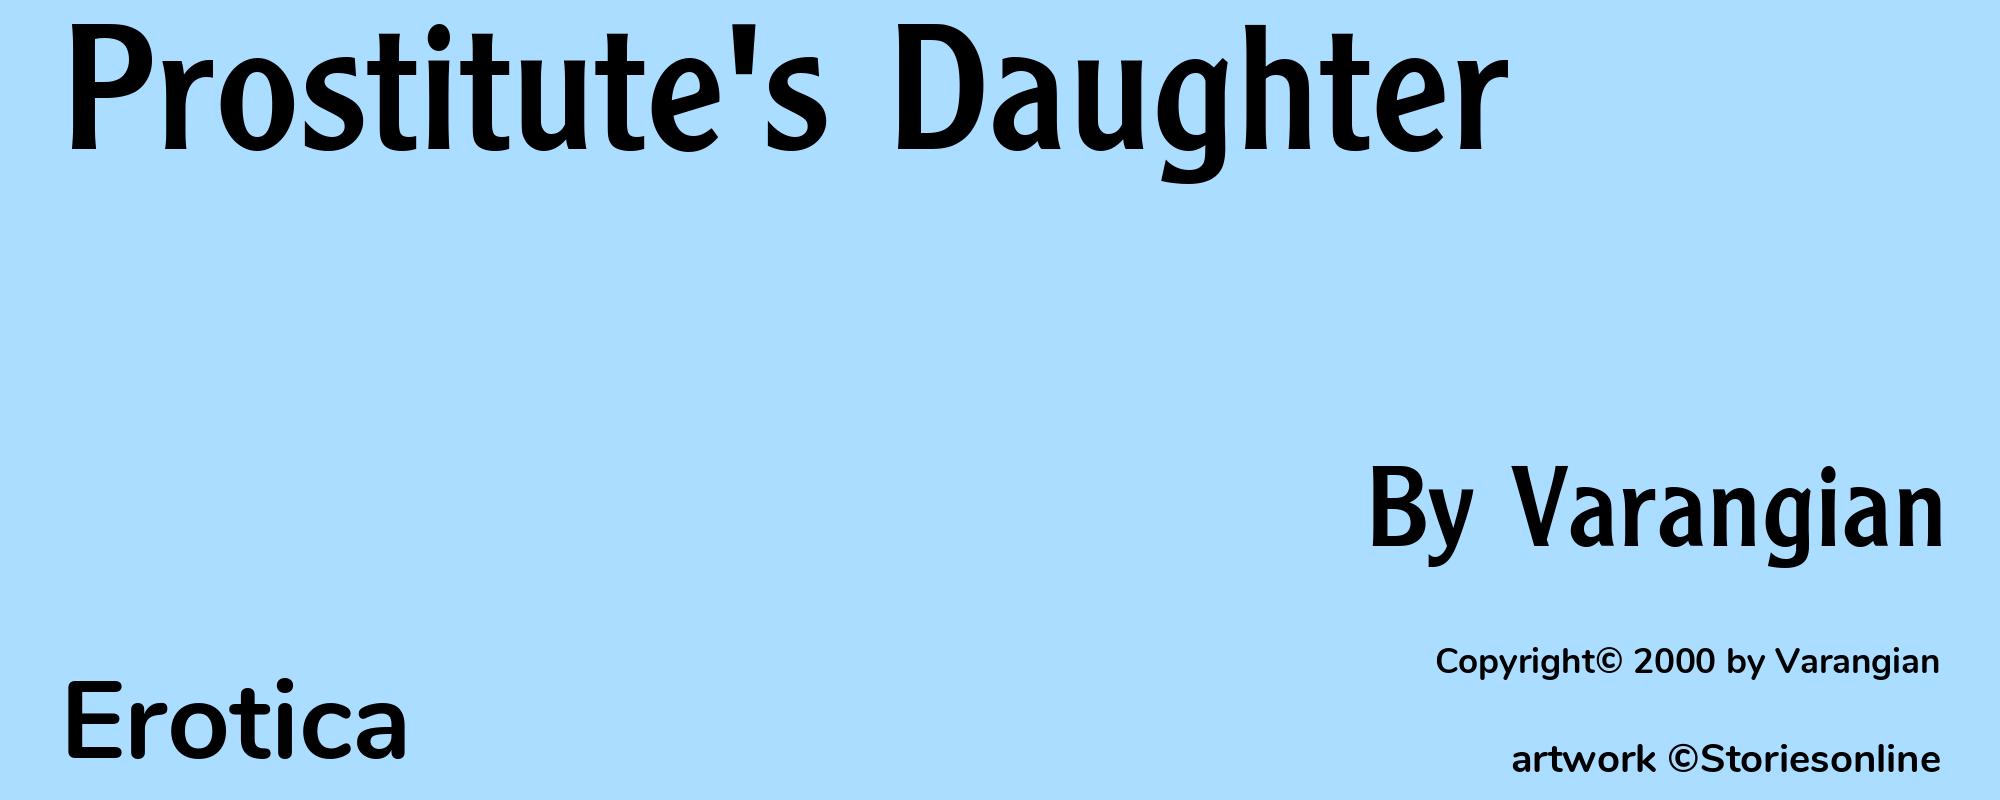 Prostitute's Daughter - Cover